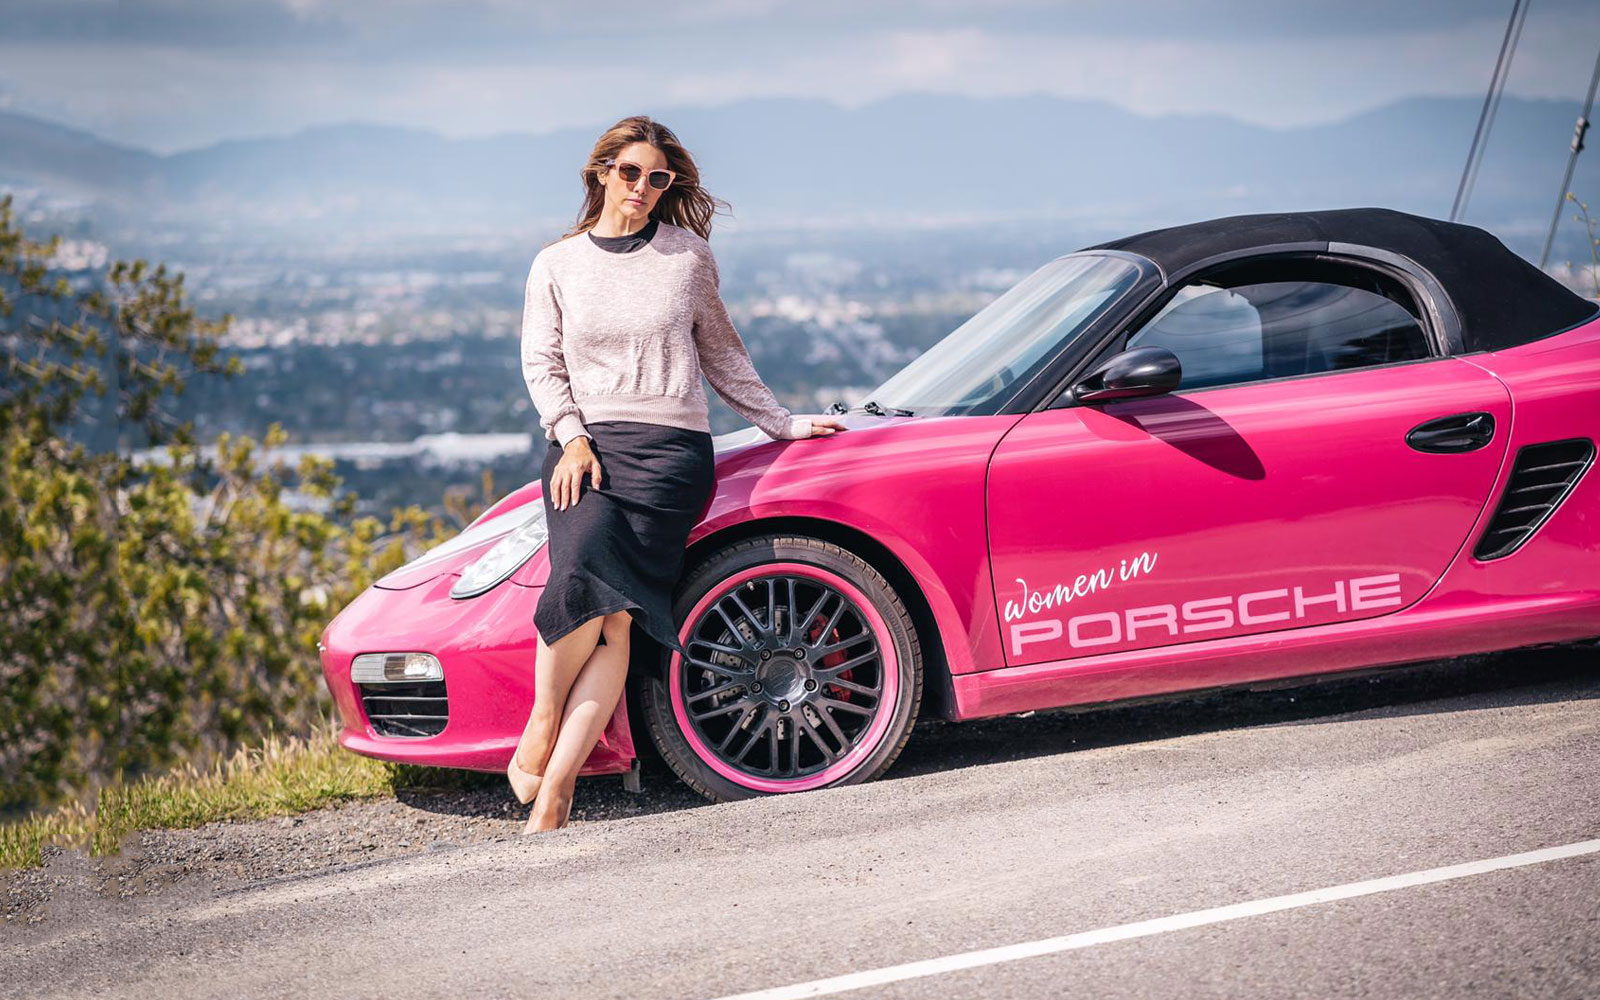 Women In Porsche, Laurina Esposito's Pink Porsche